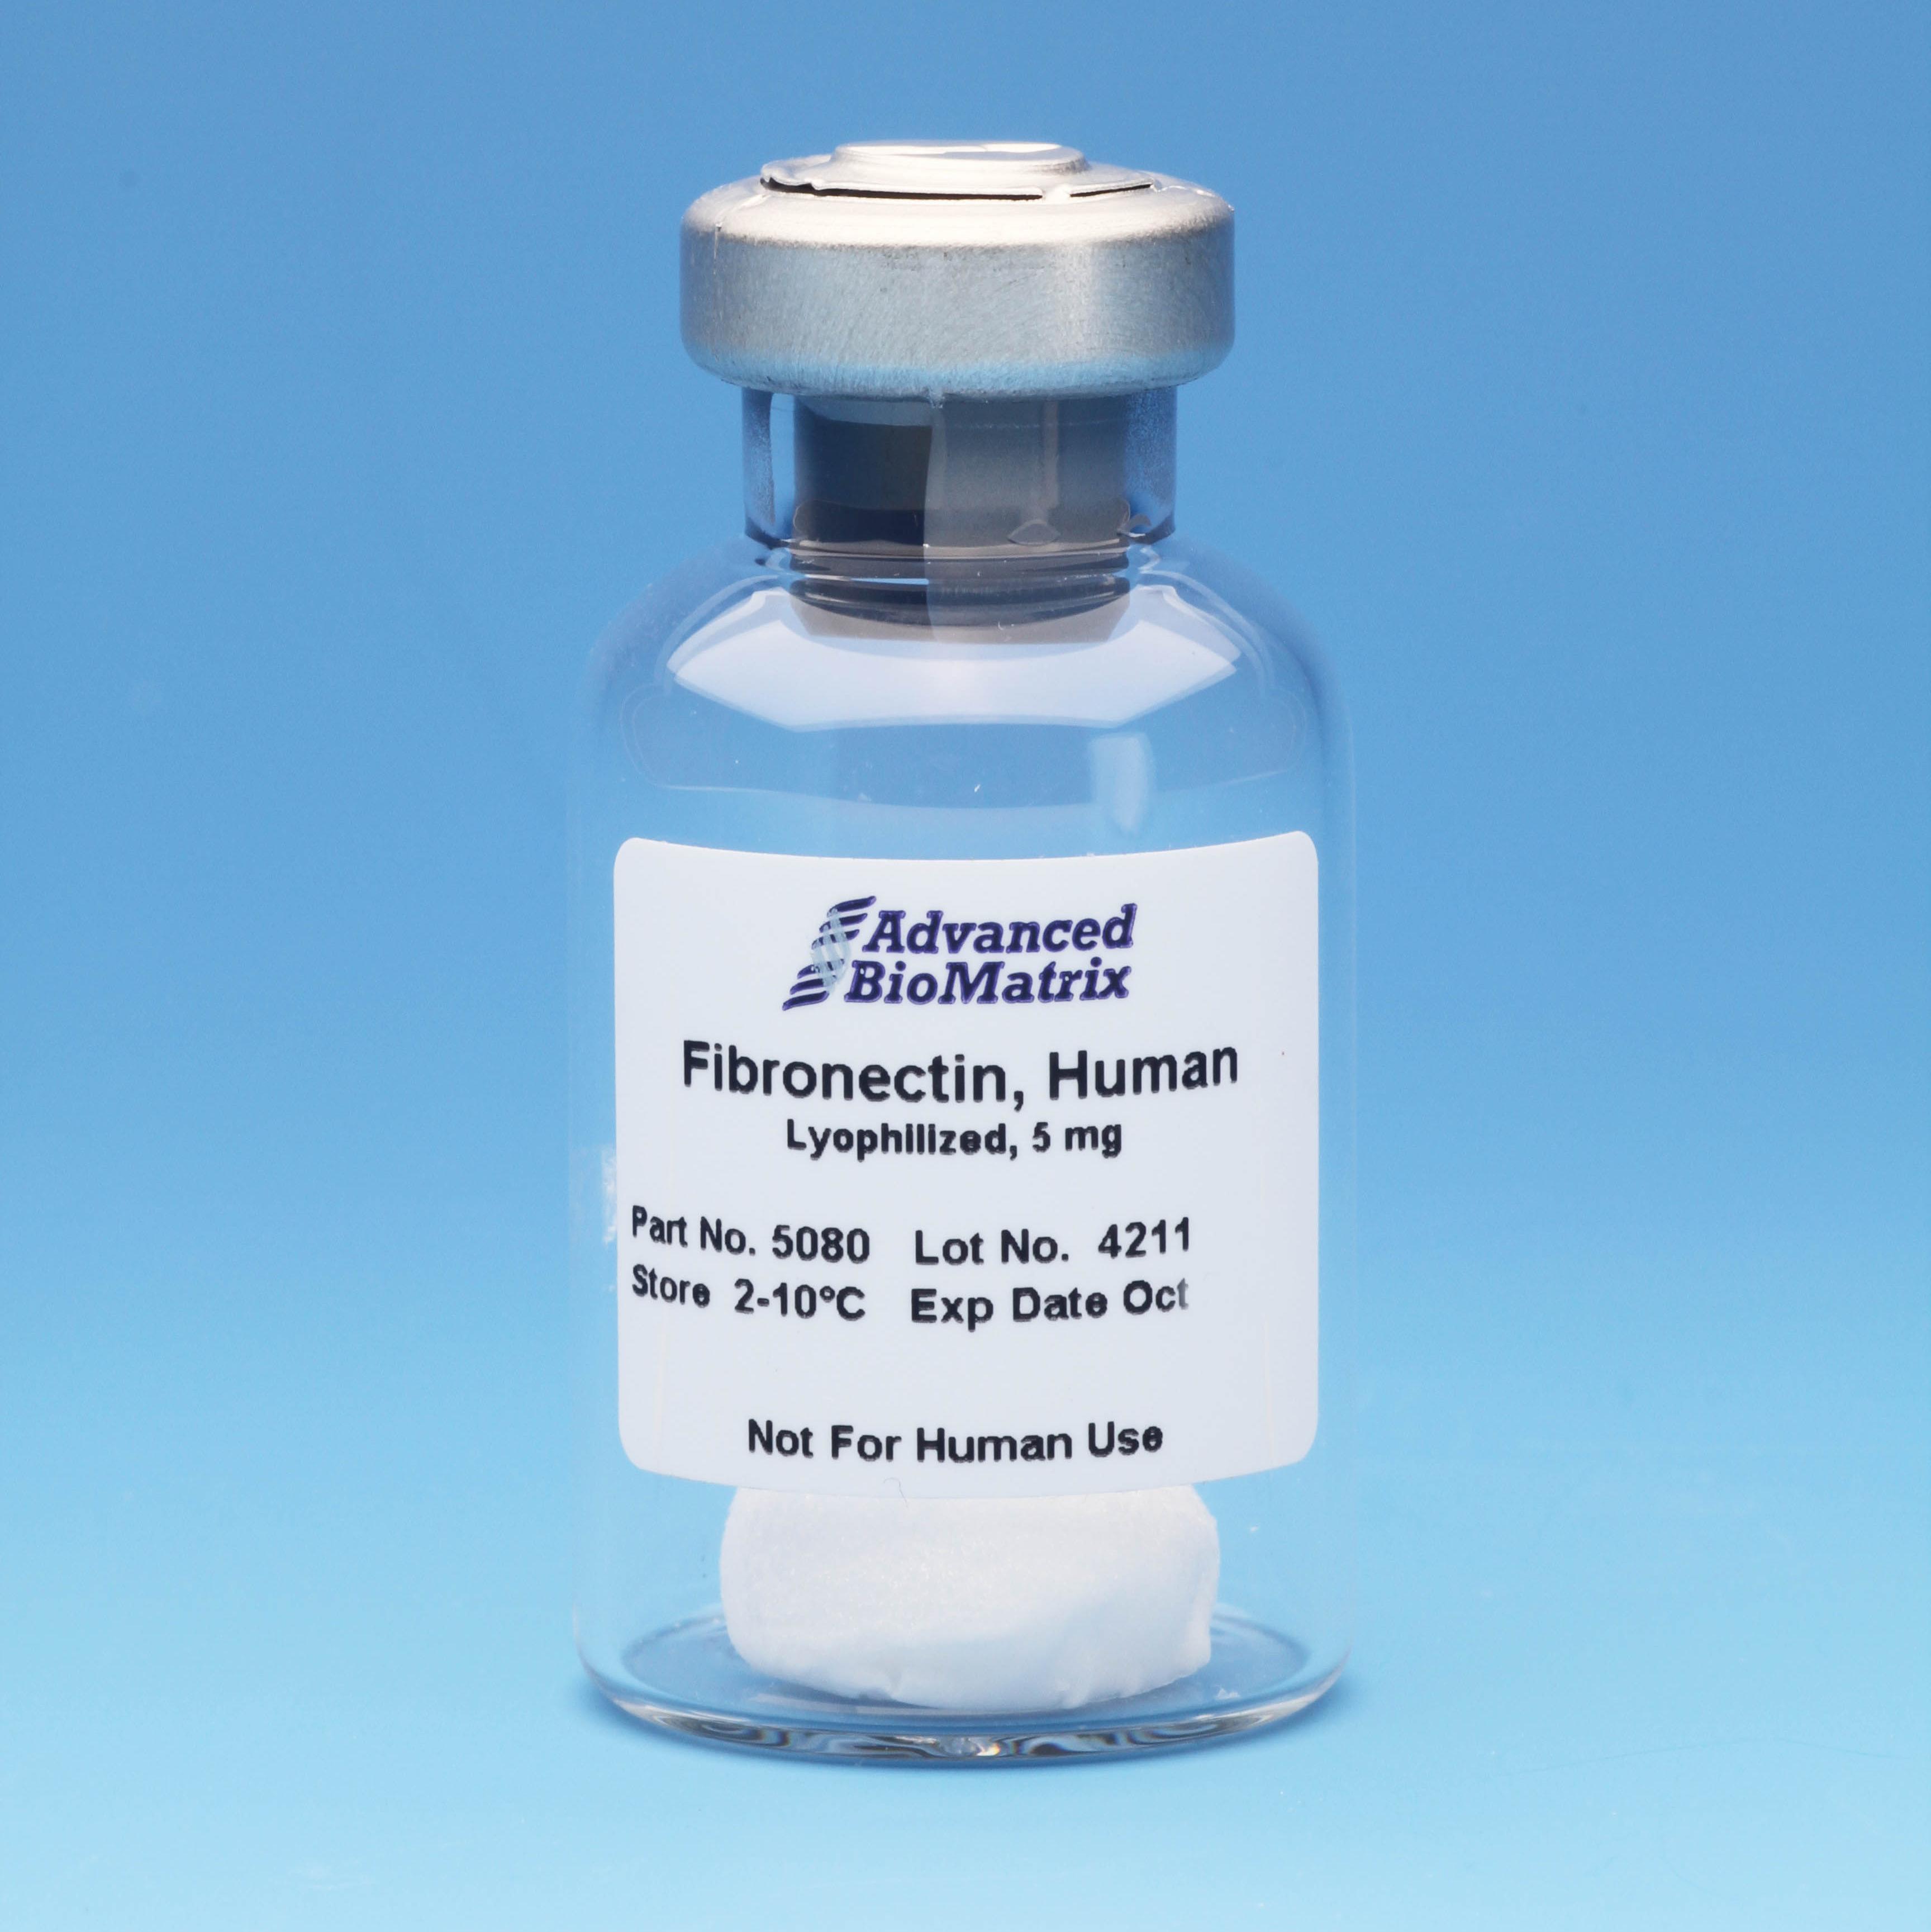 lyophilized fibronectin from advanced biomatrix